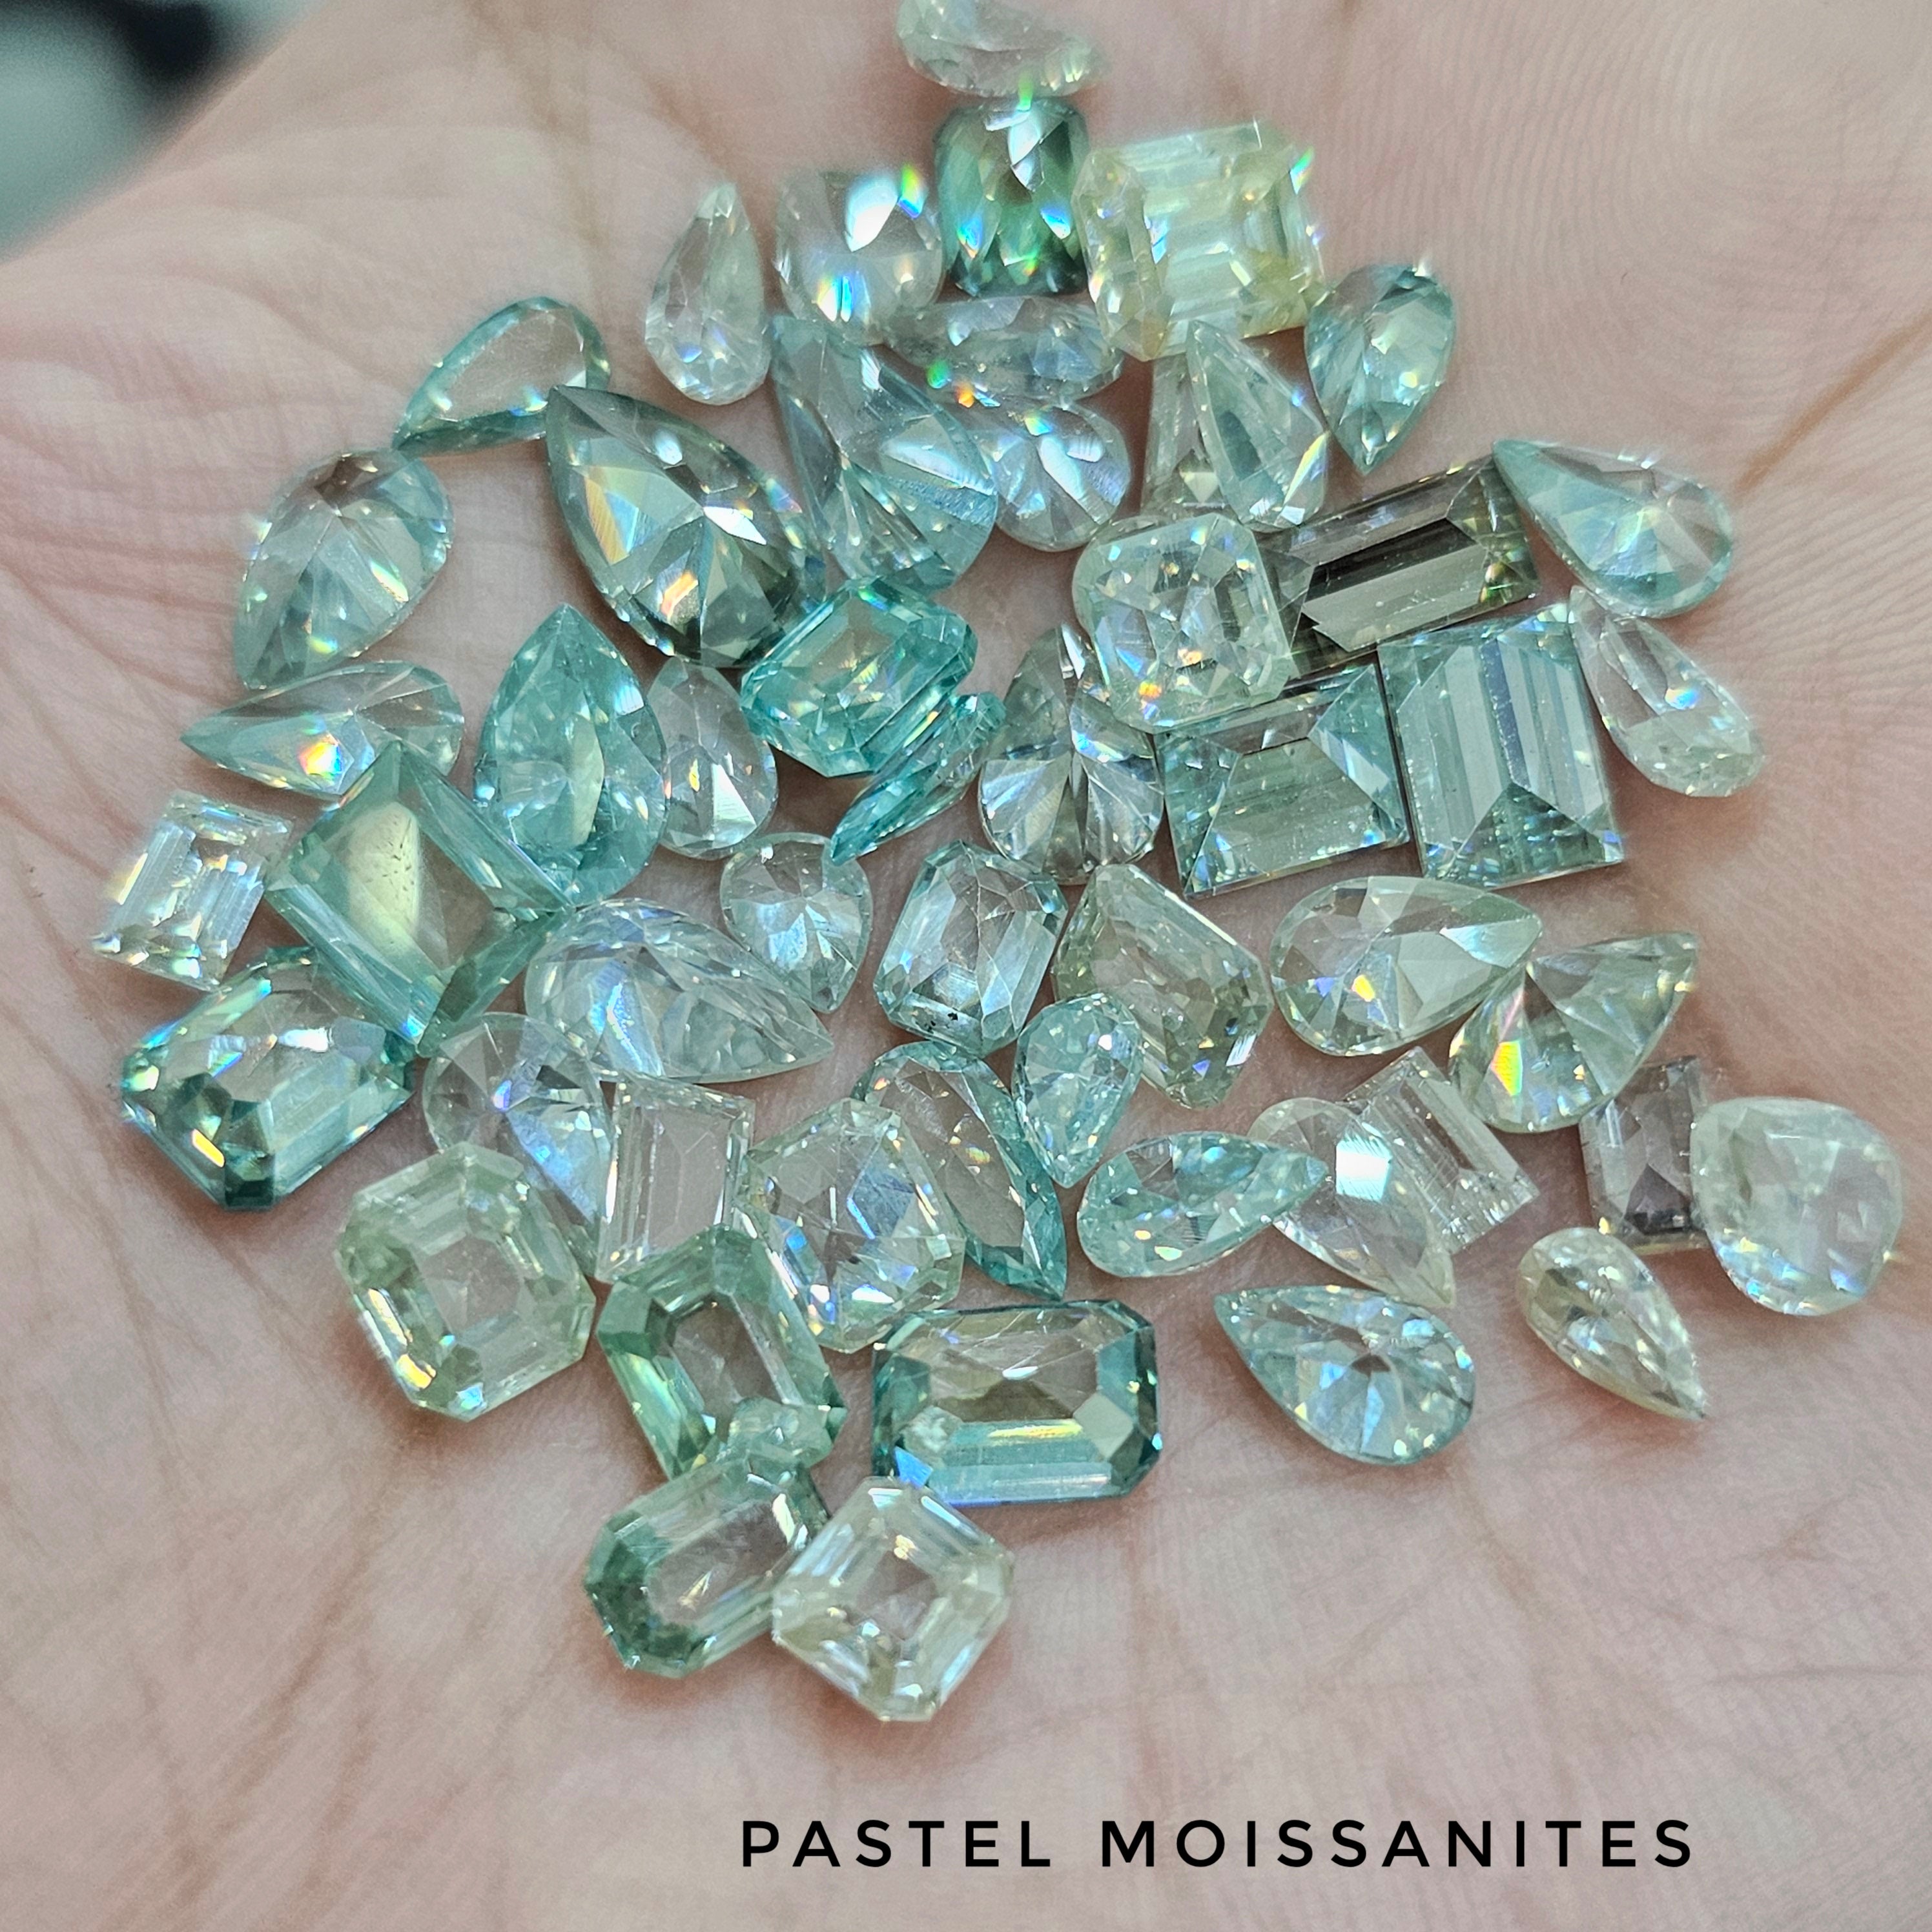 5 Pcs of Moissanites Pastel Colours | 7-9mm | Mix Shapes in VVS - The LabradoriteKing